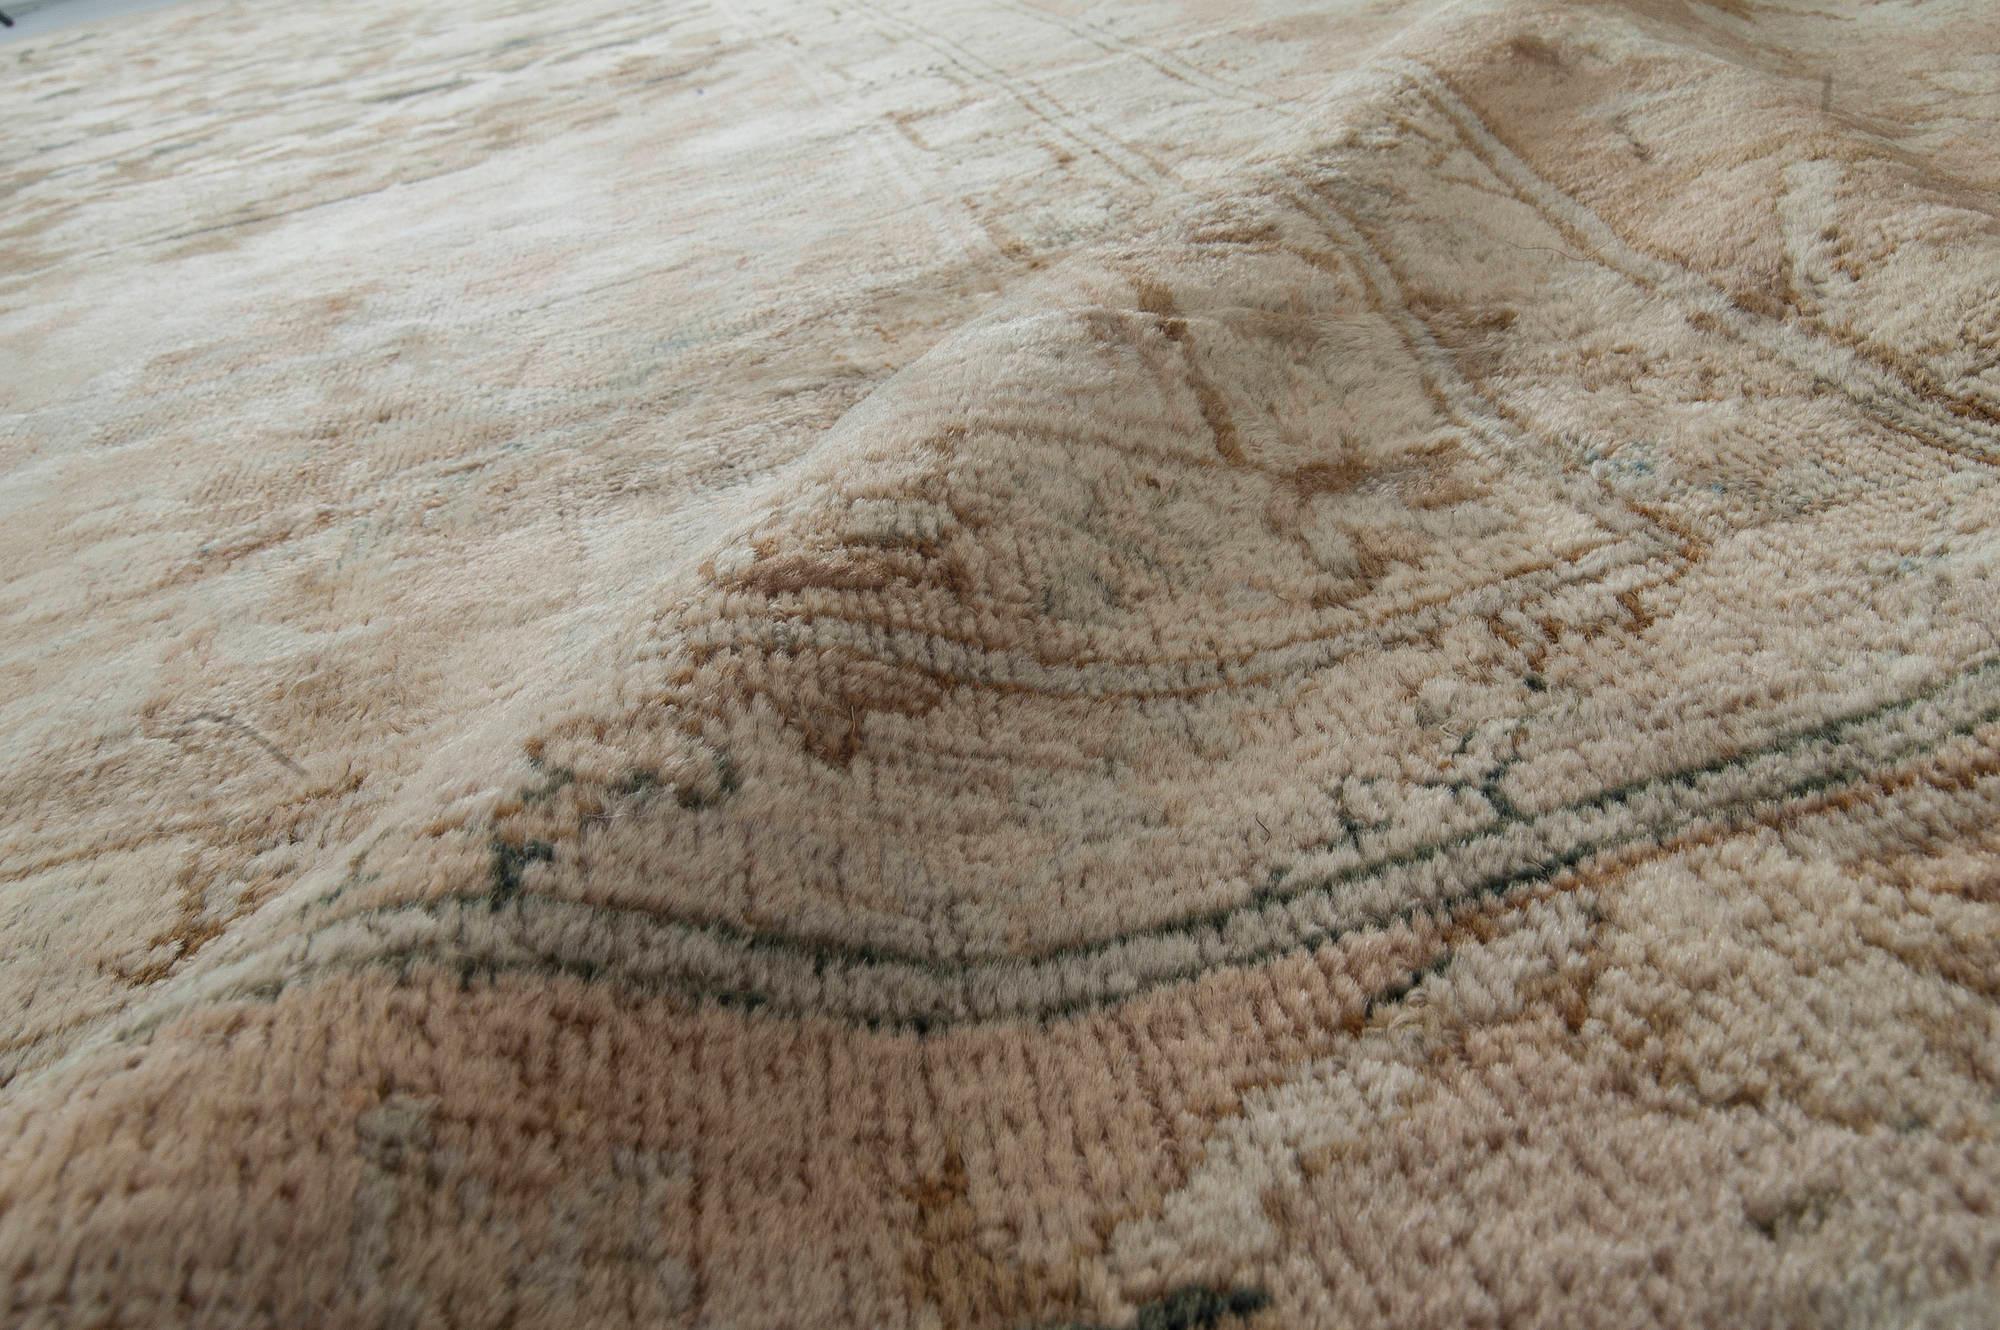 Early 20th century Botanic brown, beige Indian Amritsar wool carpet
Size: 11'7